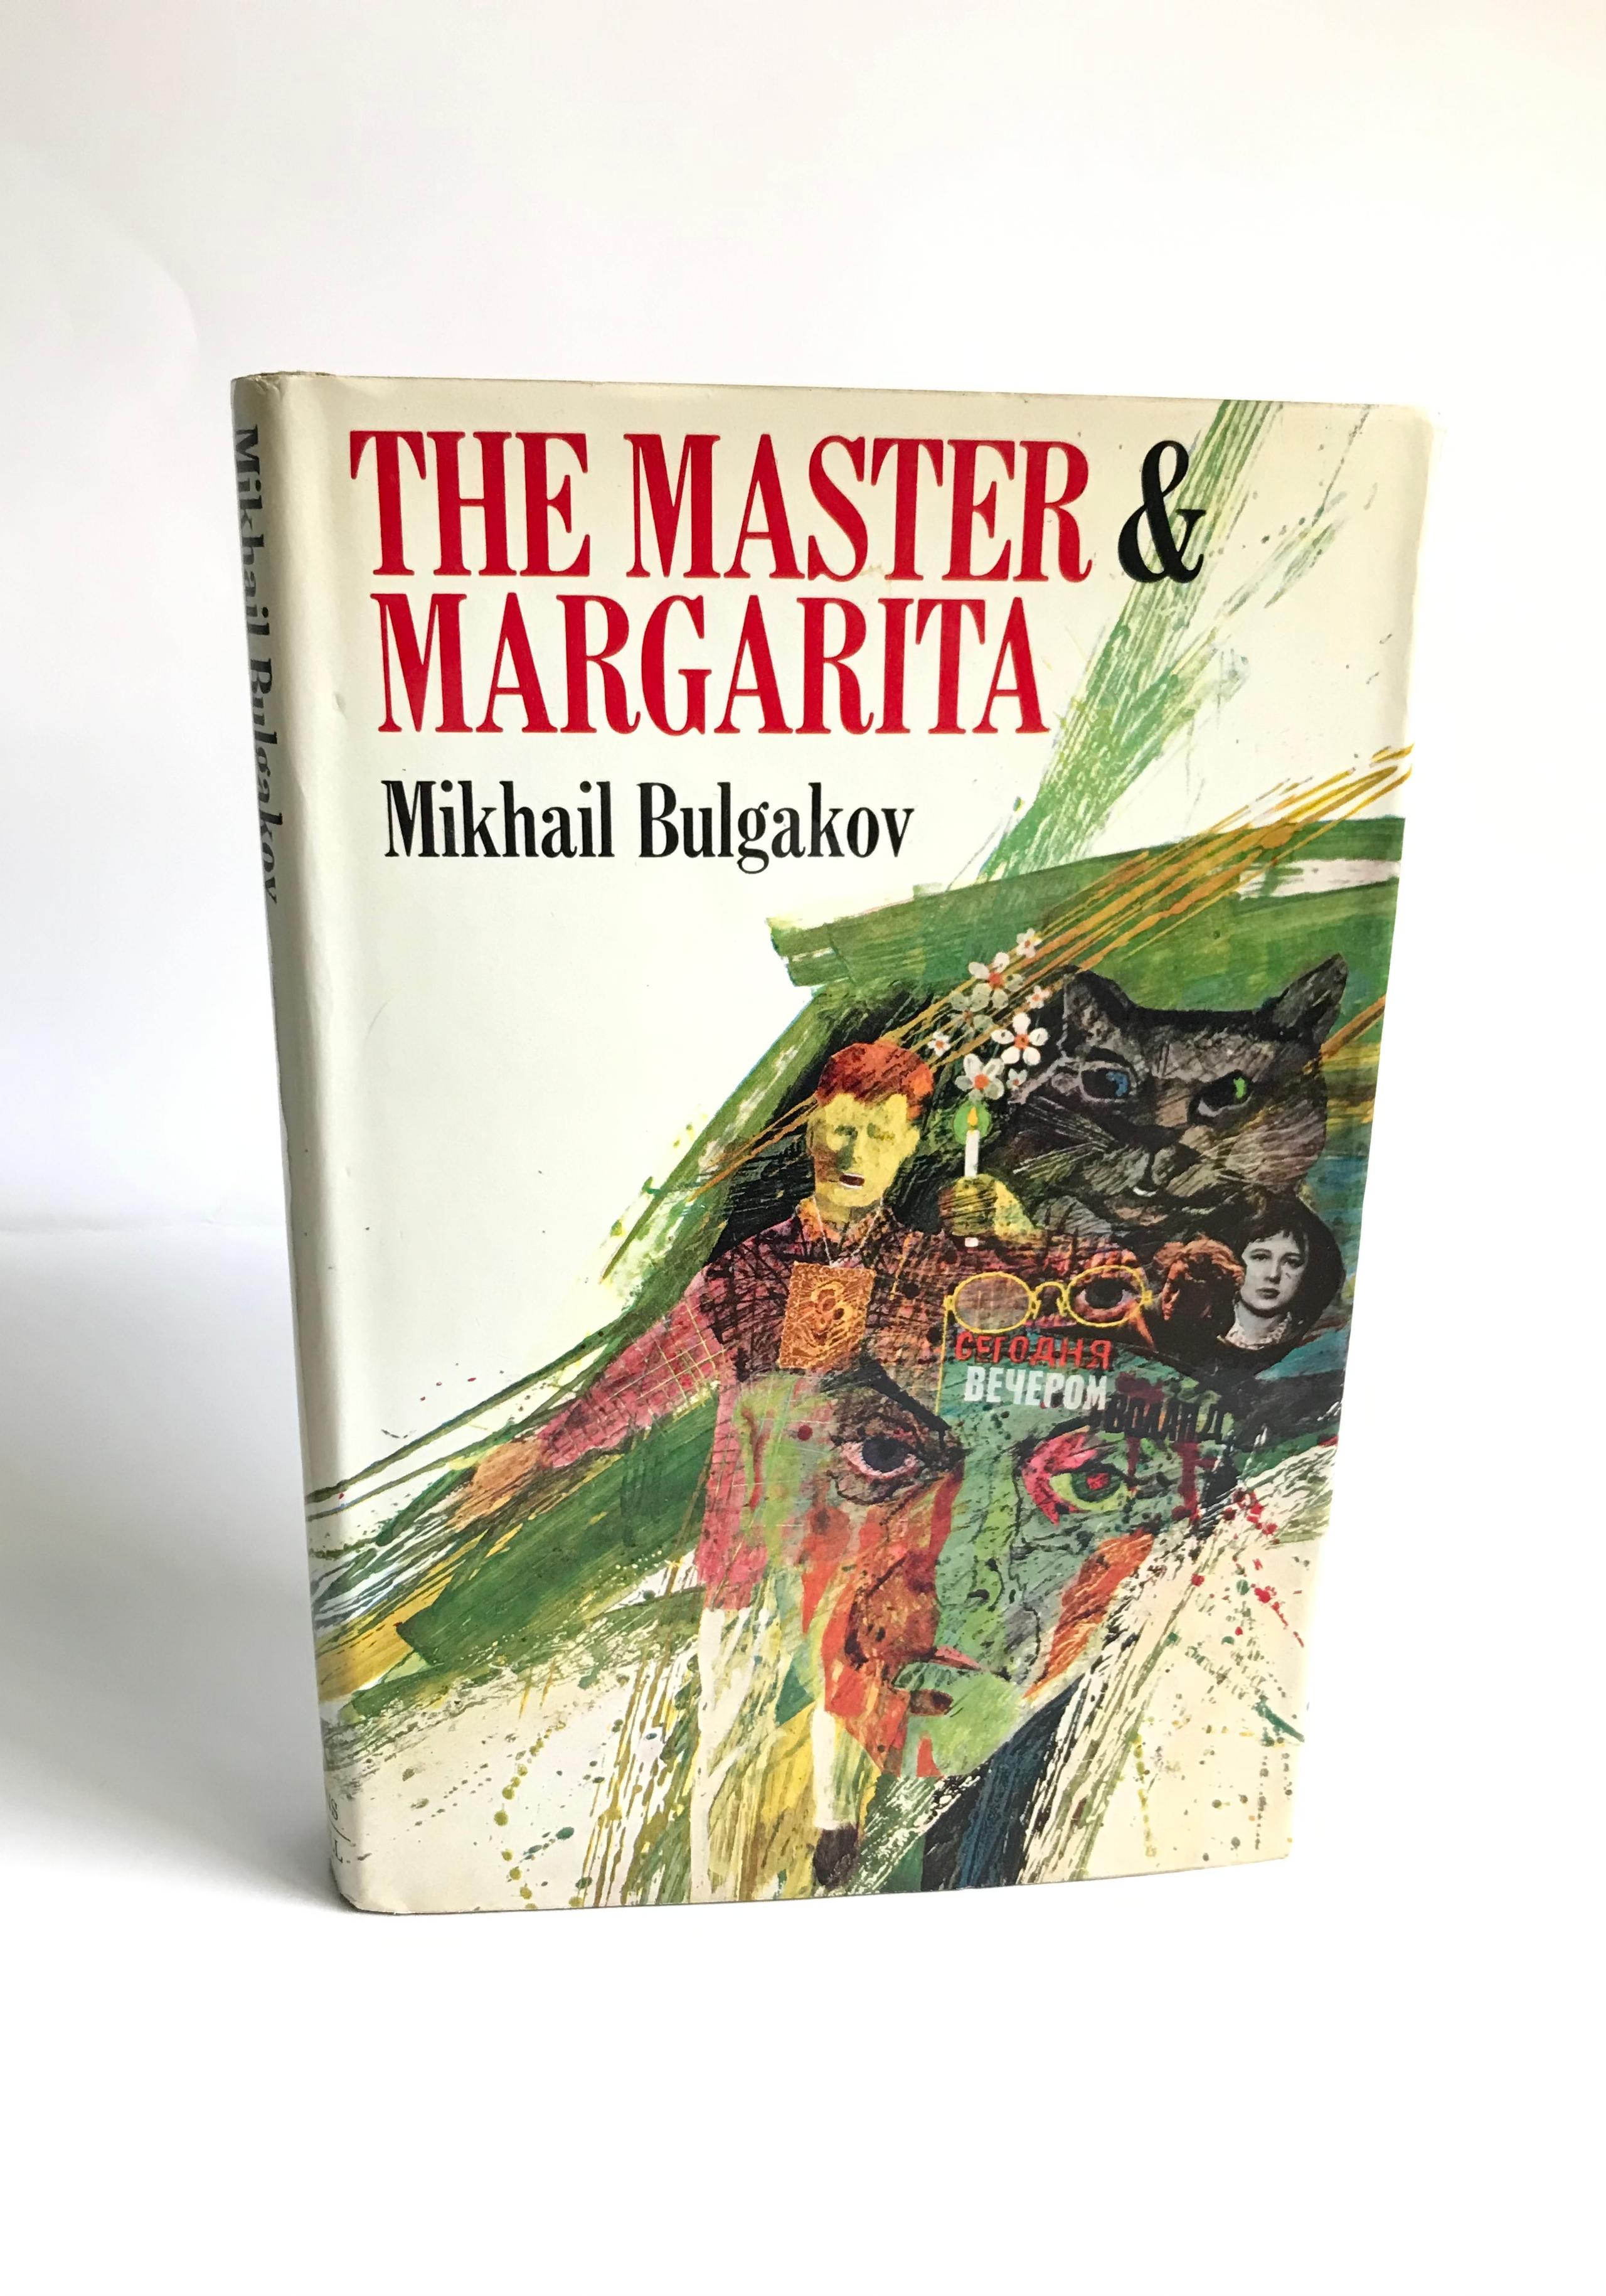 The Master & Margarita by Mikhail Bulgakov